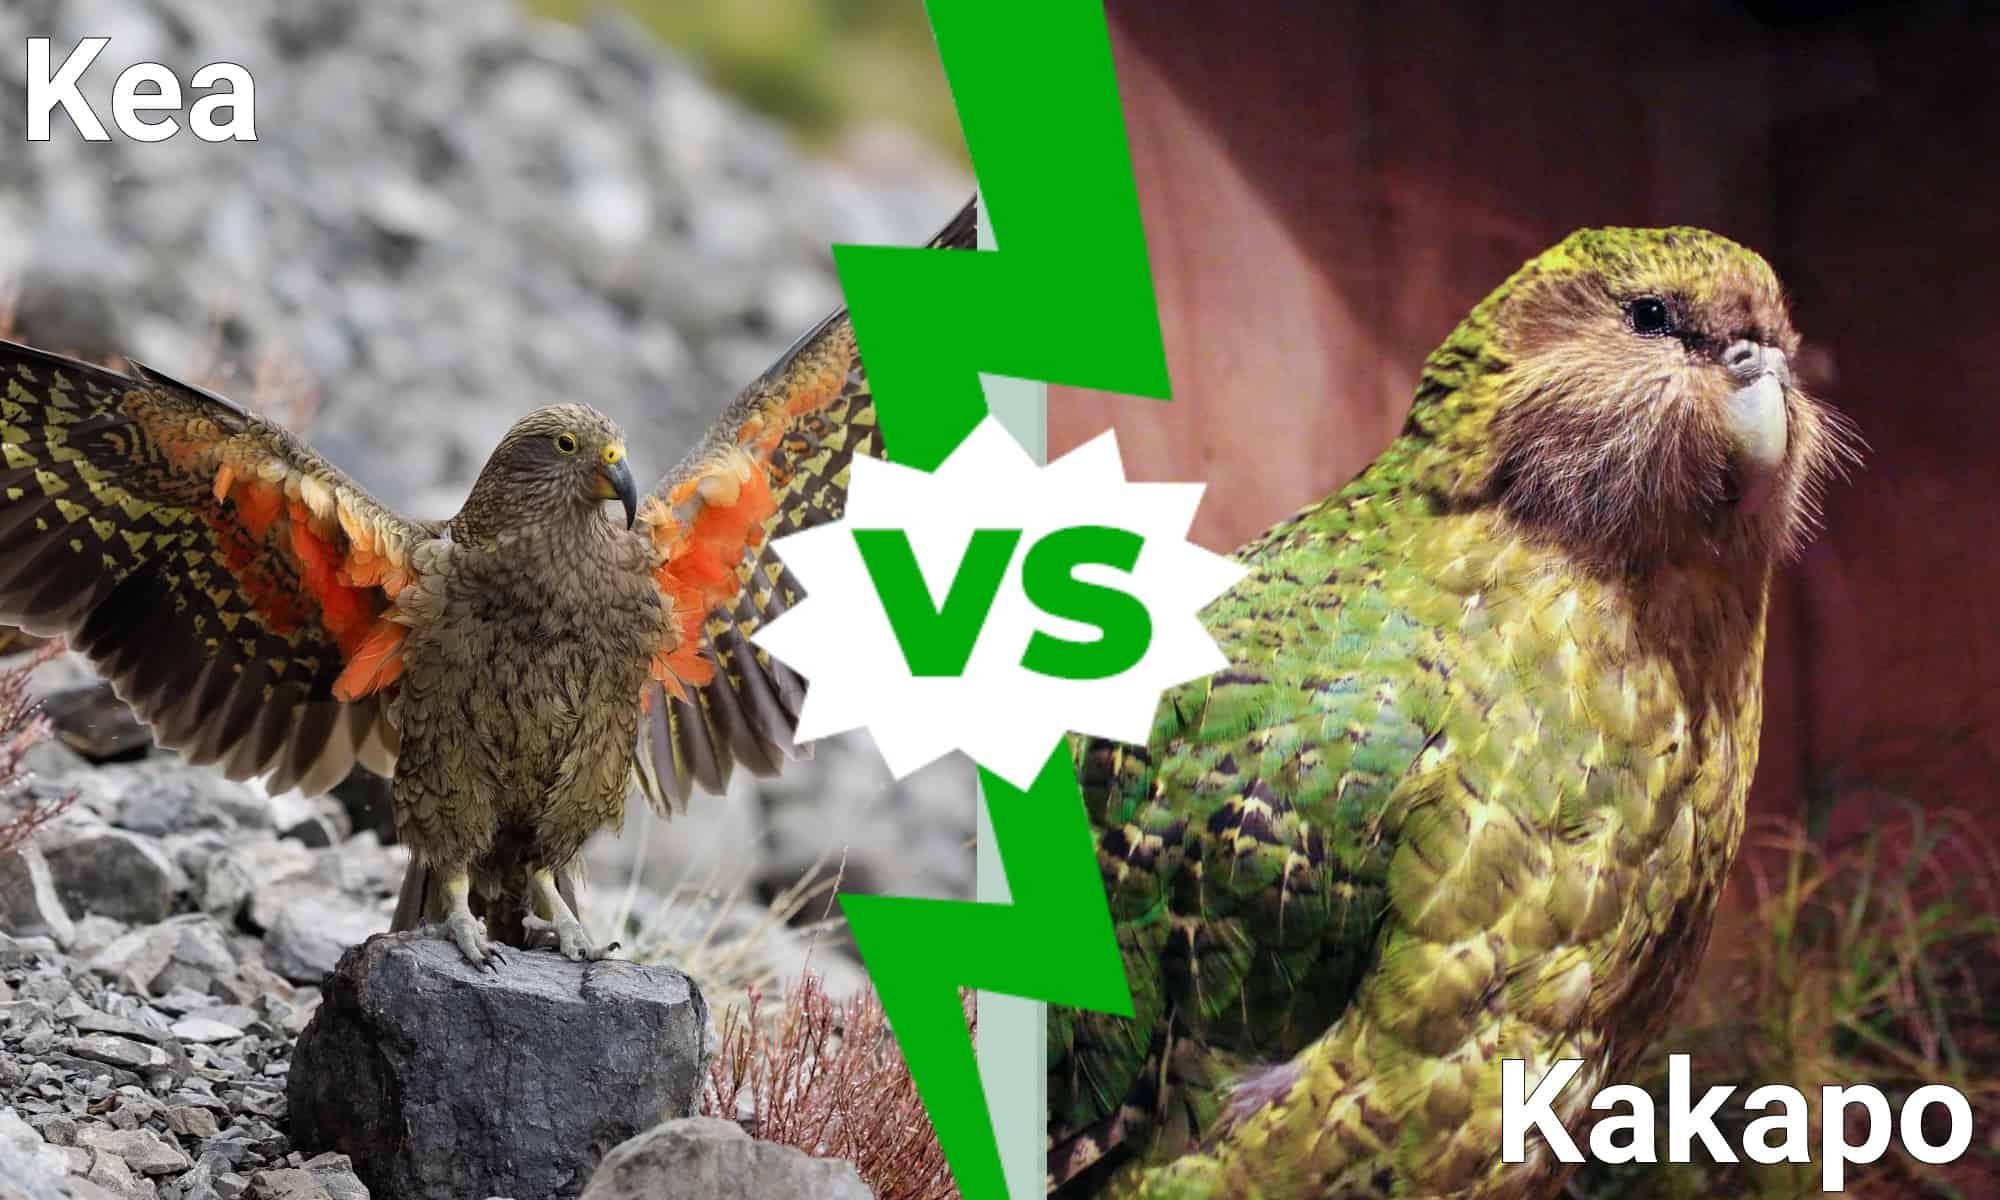 Kea Vs. Kakapo: What's the Difference?